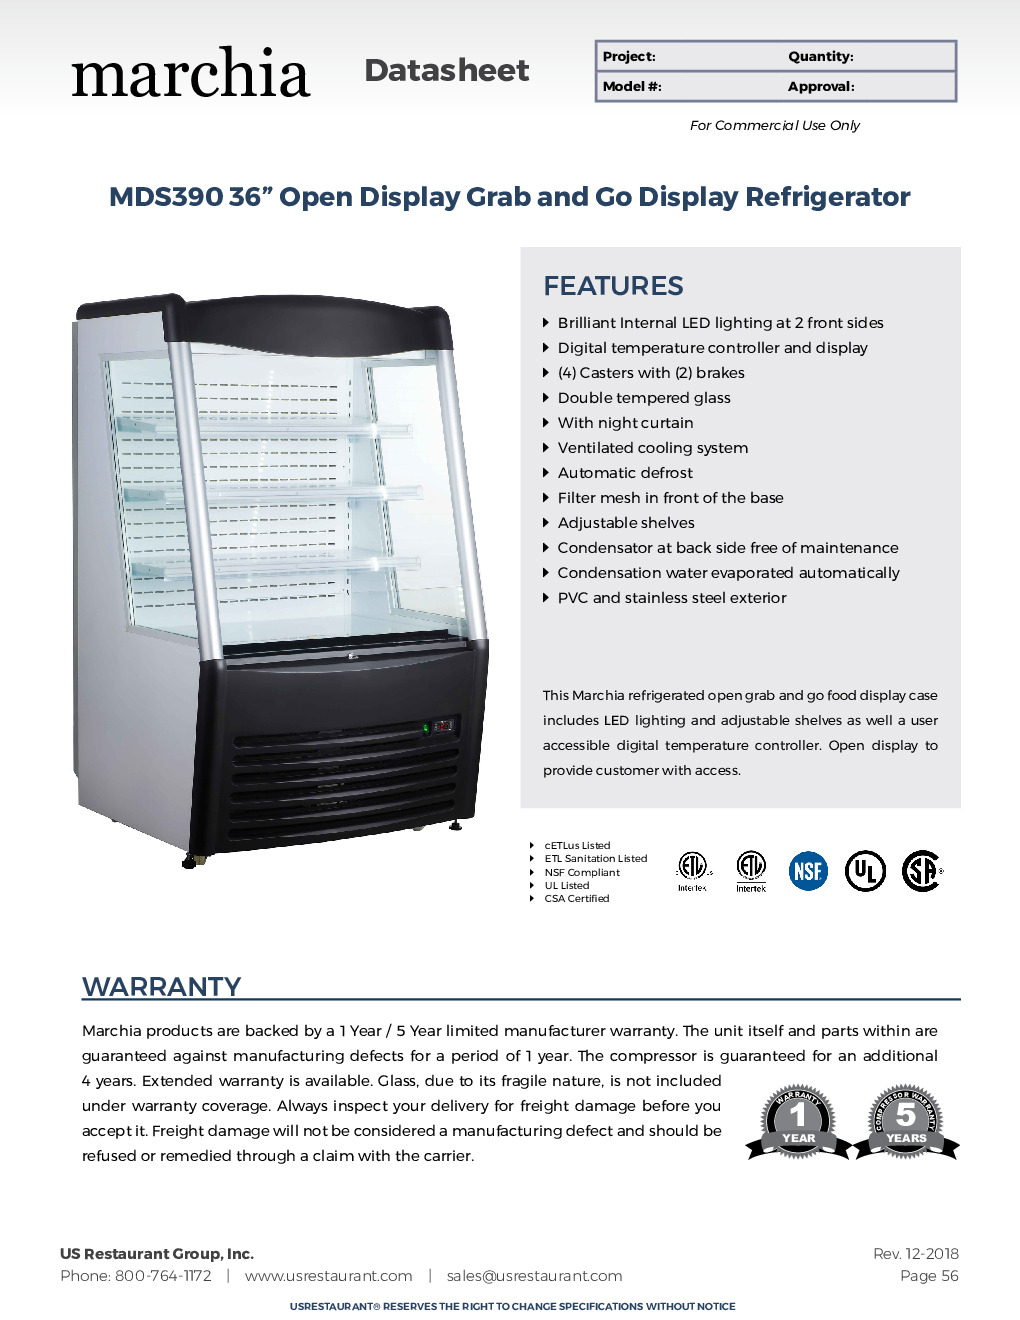 USR Brands MDS390 Open Refrigerated Display Merchandiser